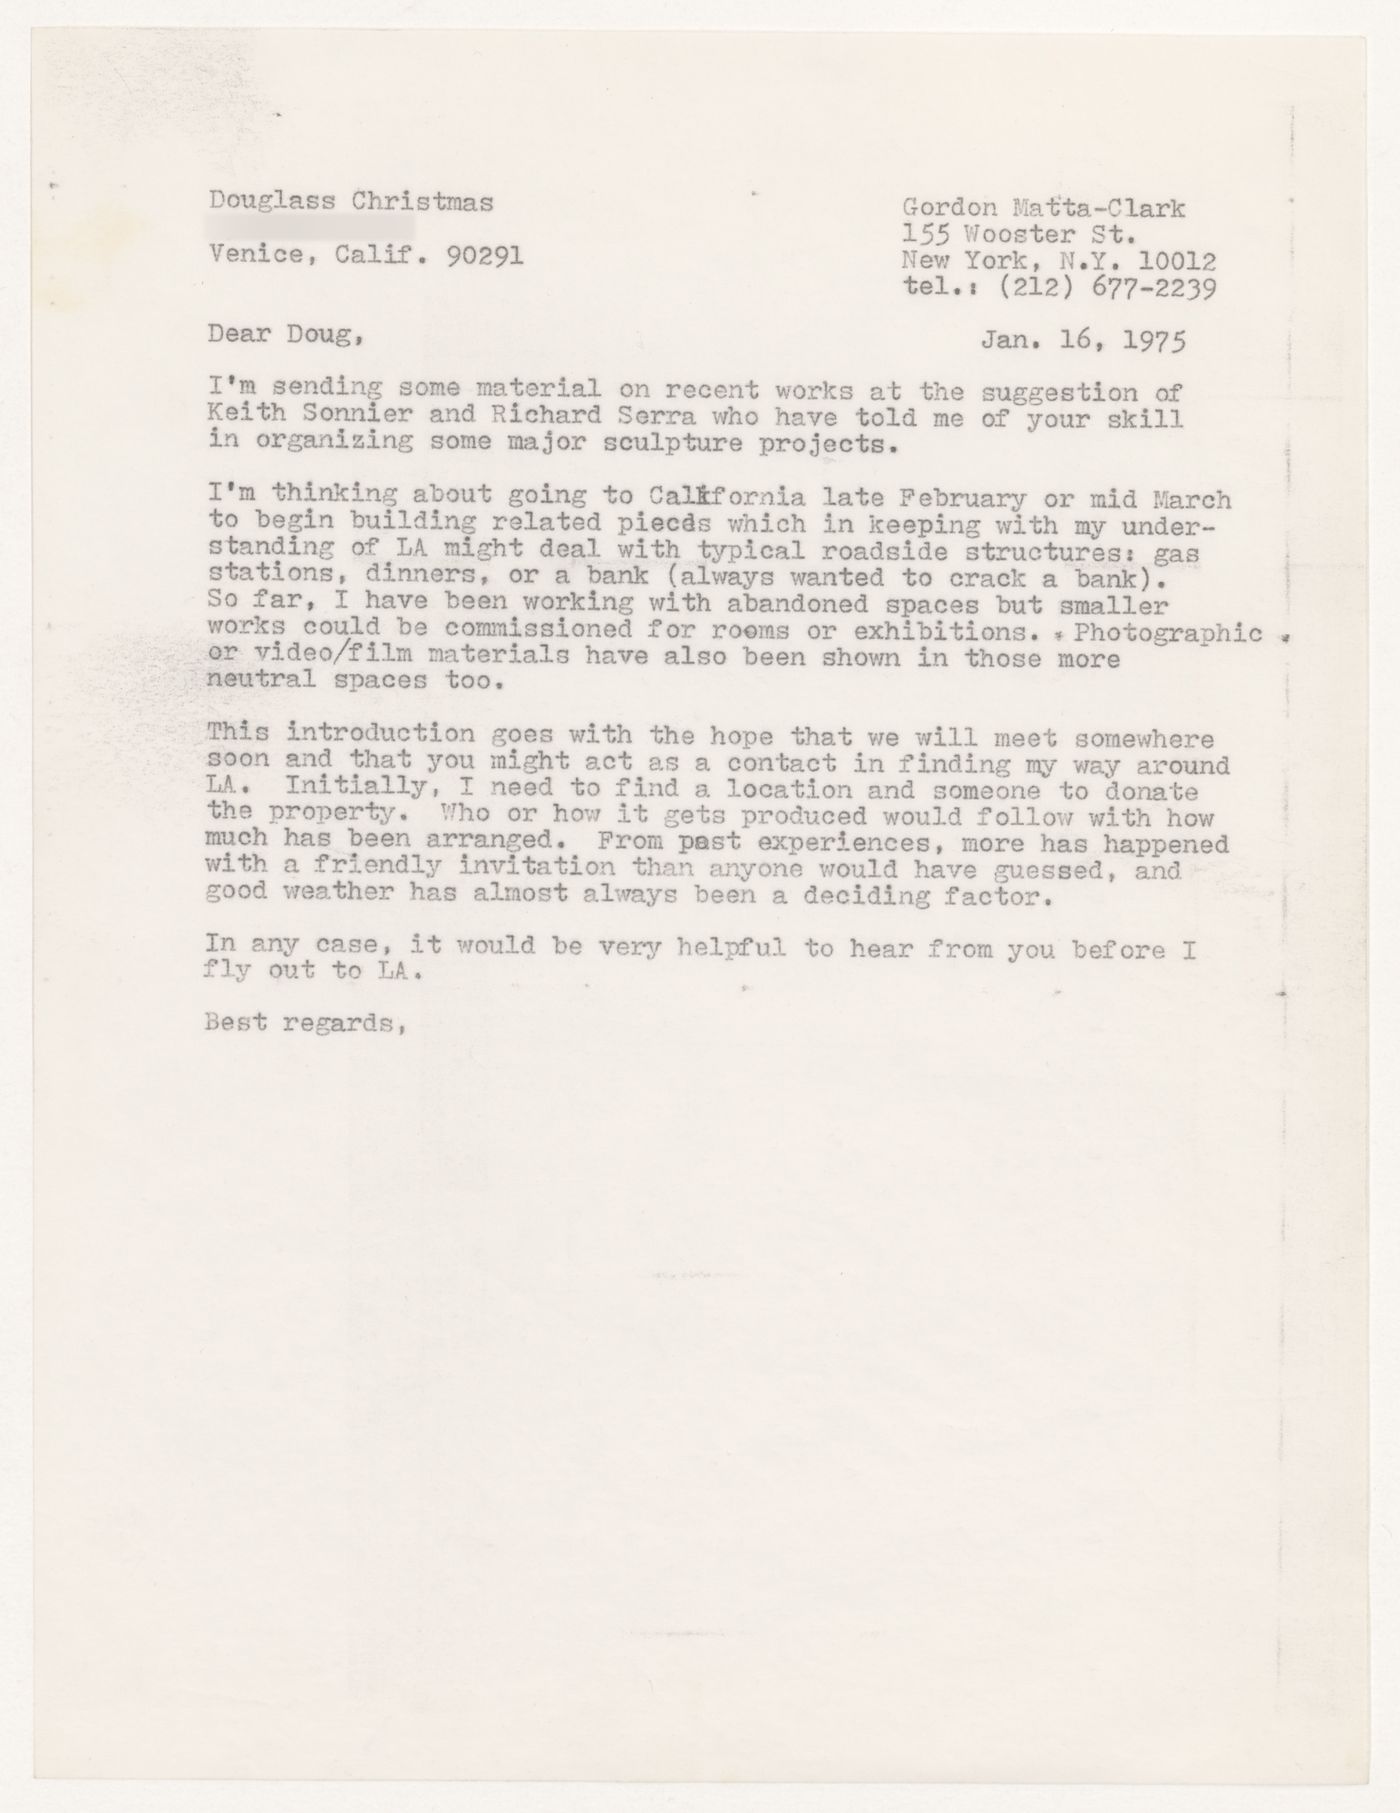 Letter from Gordon Matta-Clark to Douglass [sic] Christmas [sic]